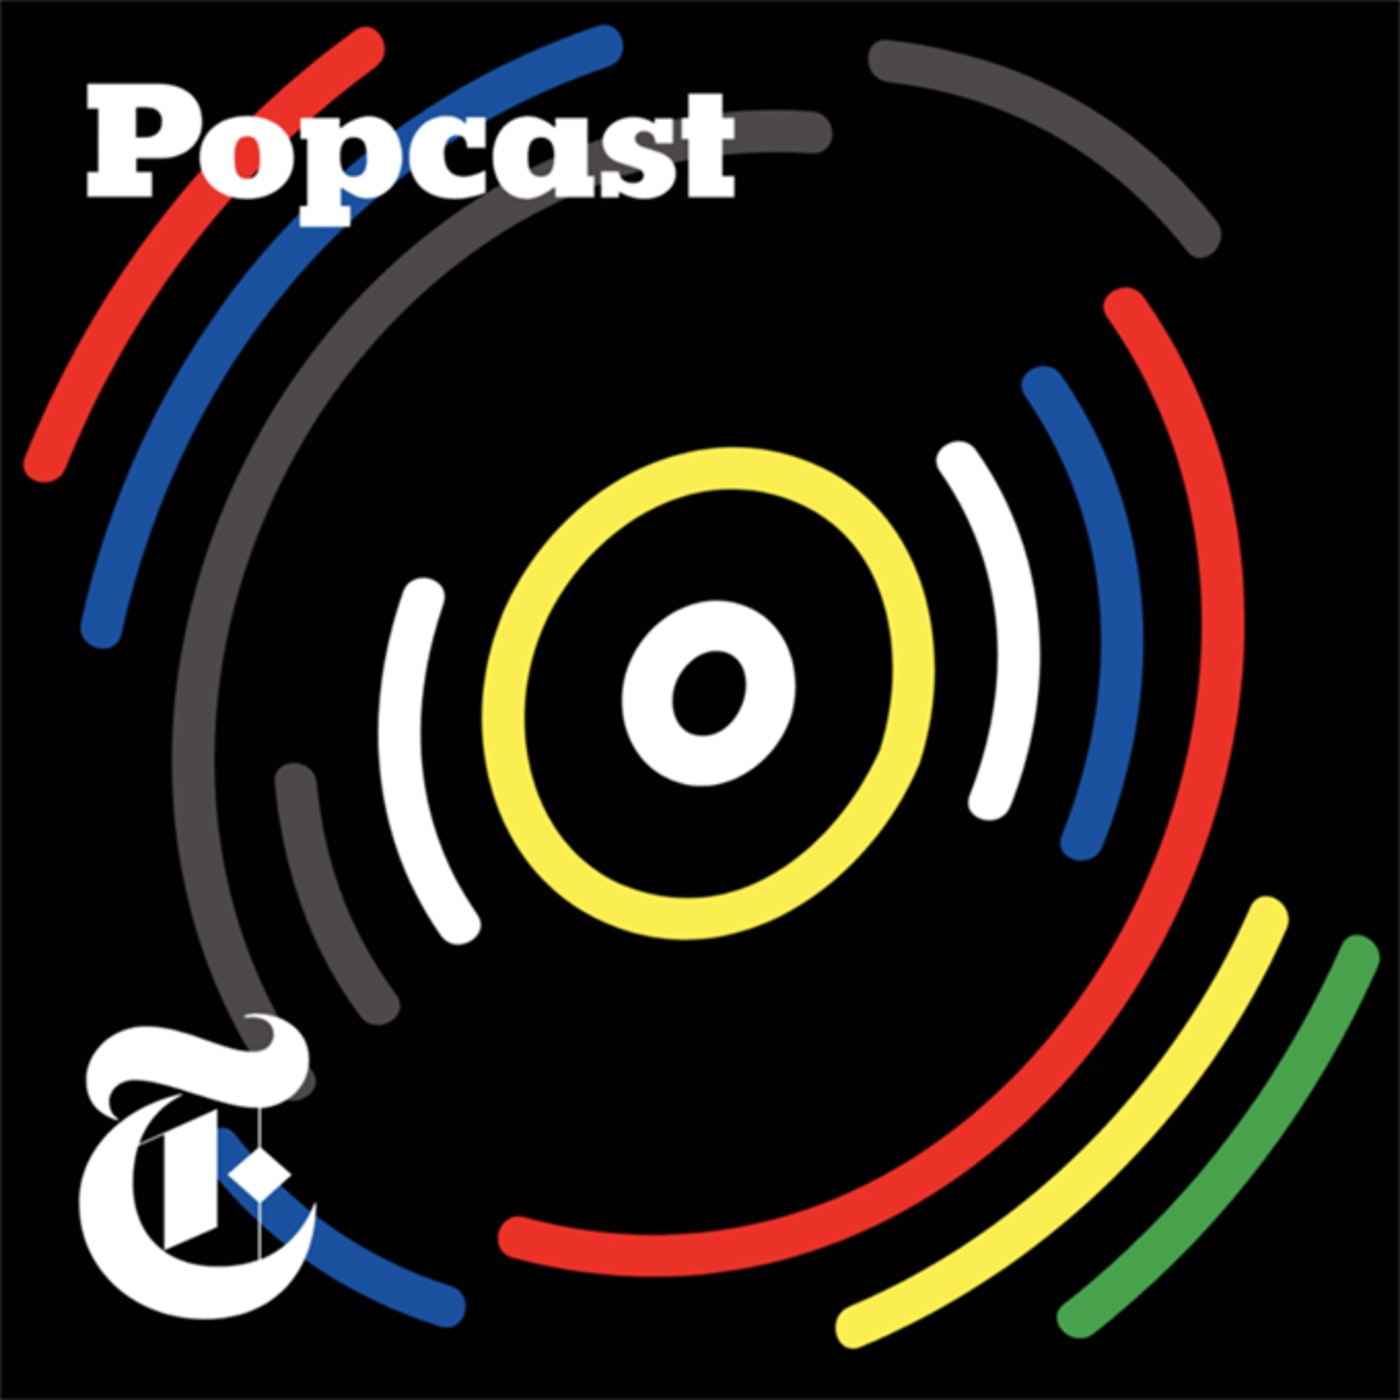 New York Times Popcast